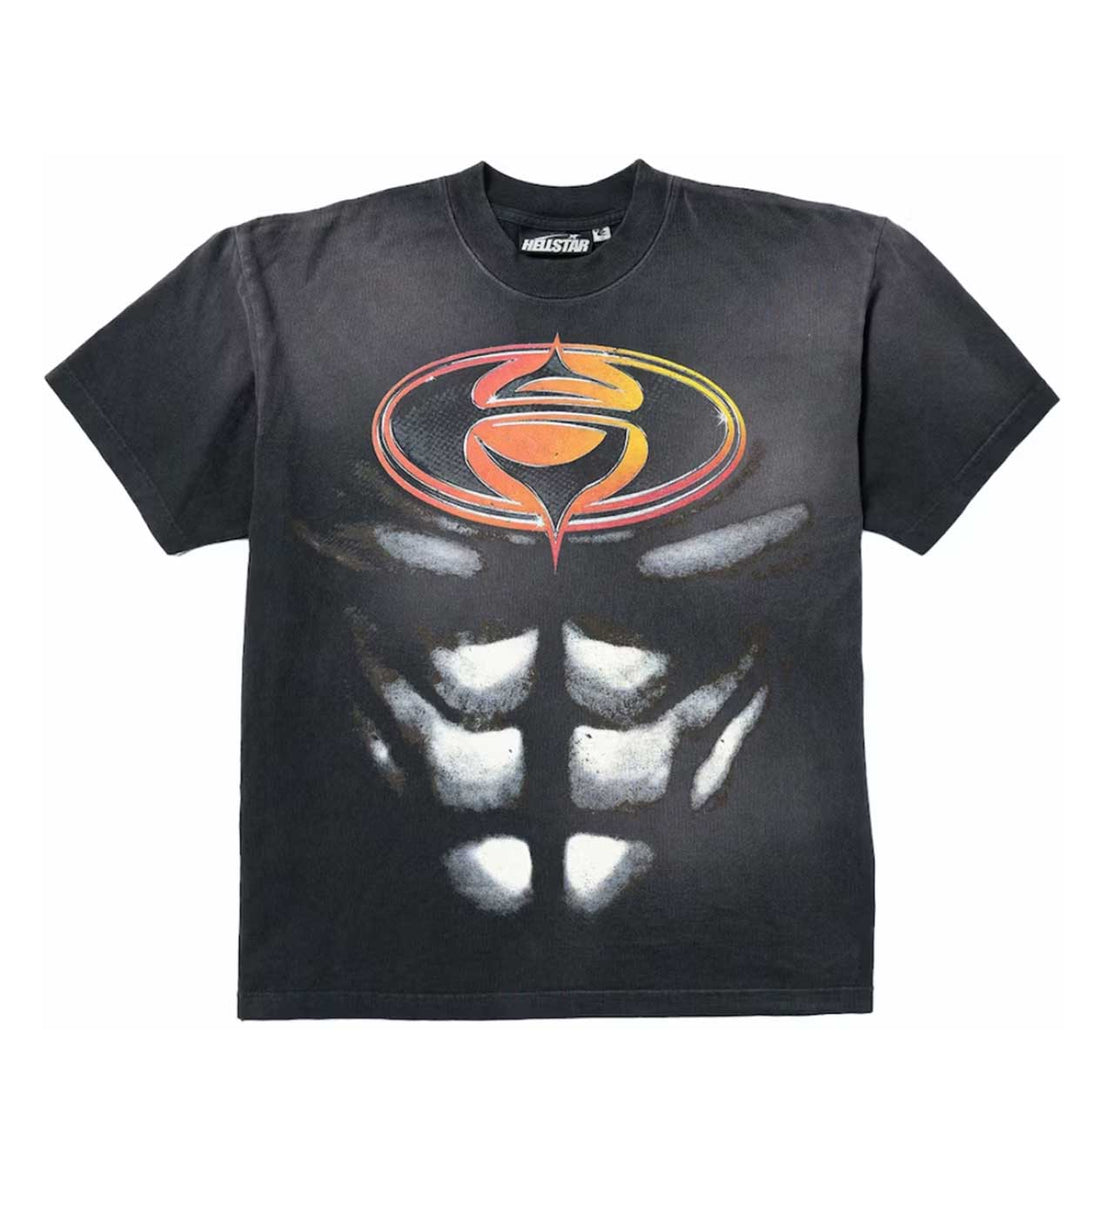 Product Image of Hellstar Superhero Tee Black Front View 